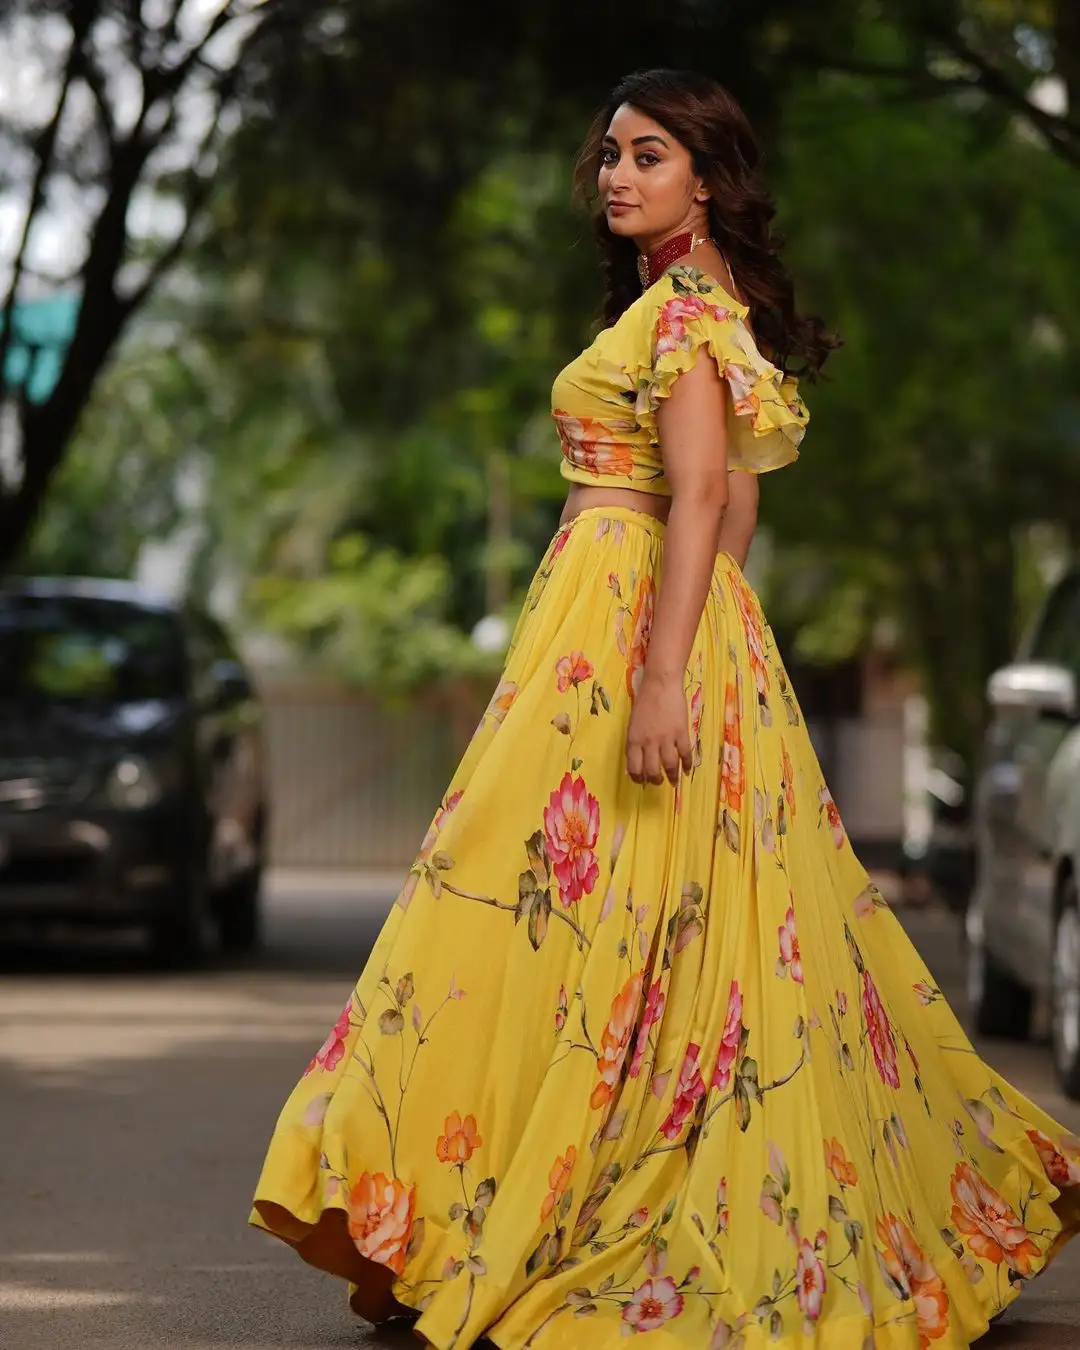 Anchor Bhanu Shree Looks Stunning In Yellow Dress